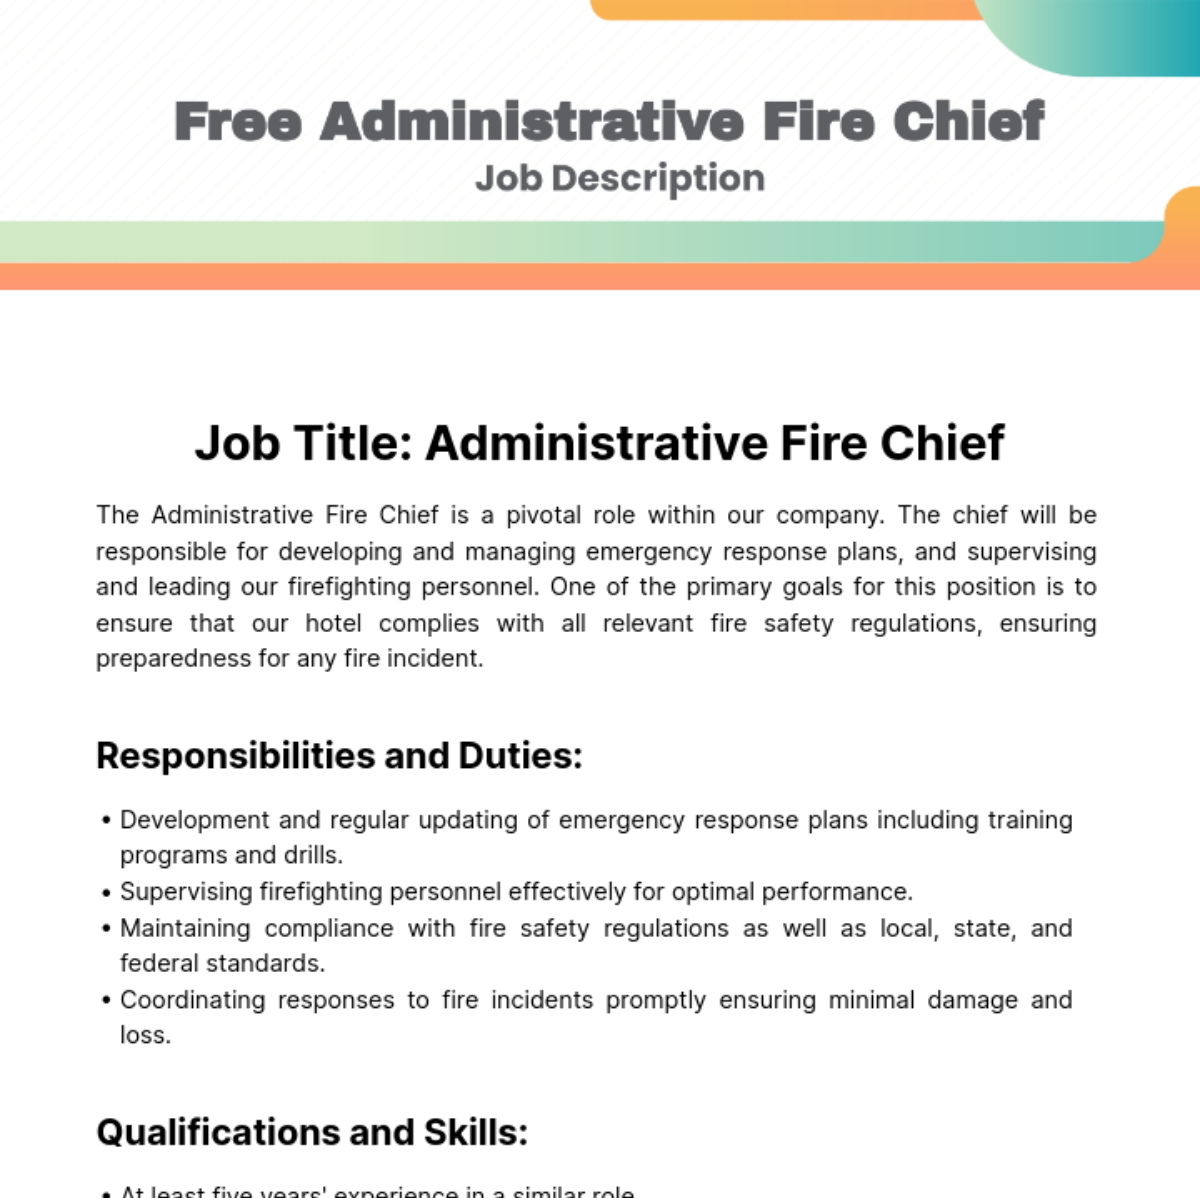 Free Administrative Fire Chief Job Description Template